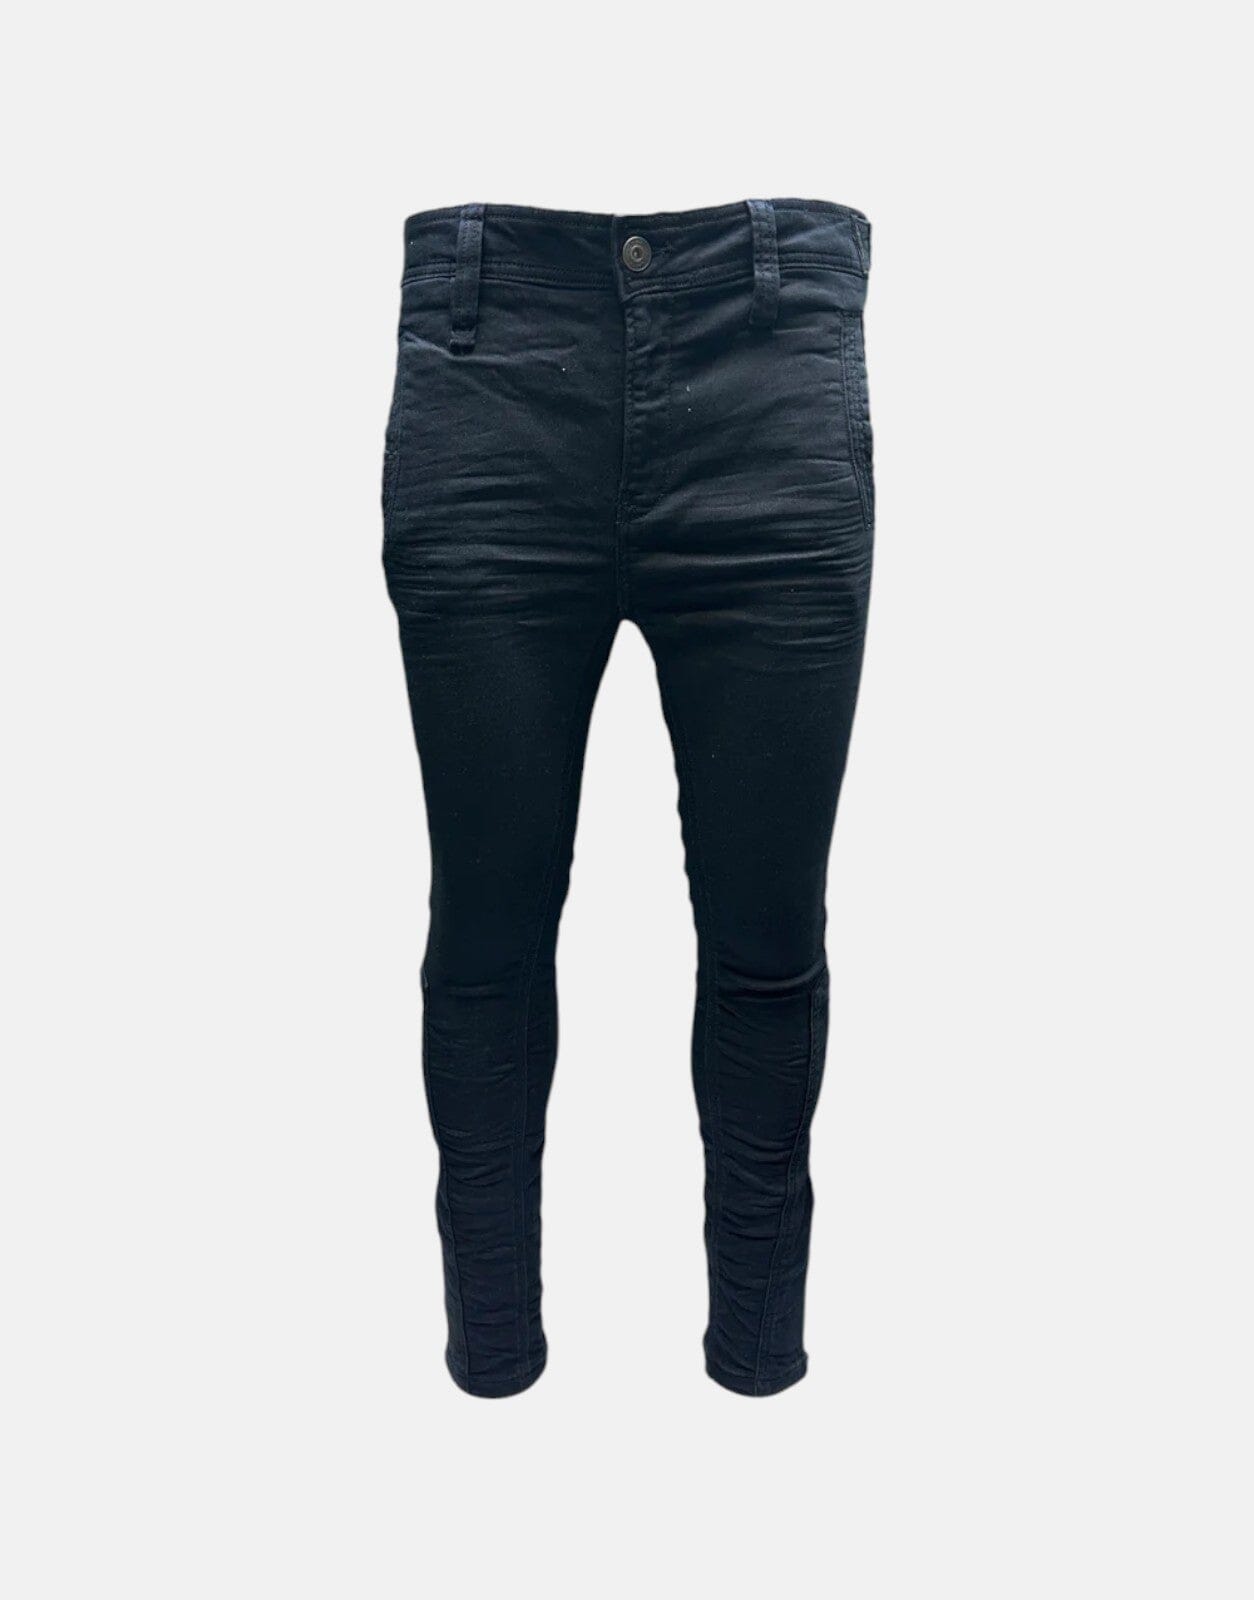 Vialli Kosmos Dk Navy Jeans - Subwear